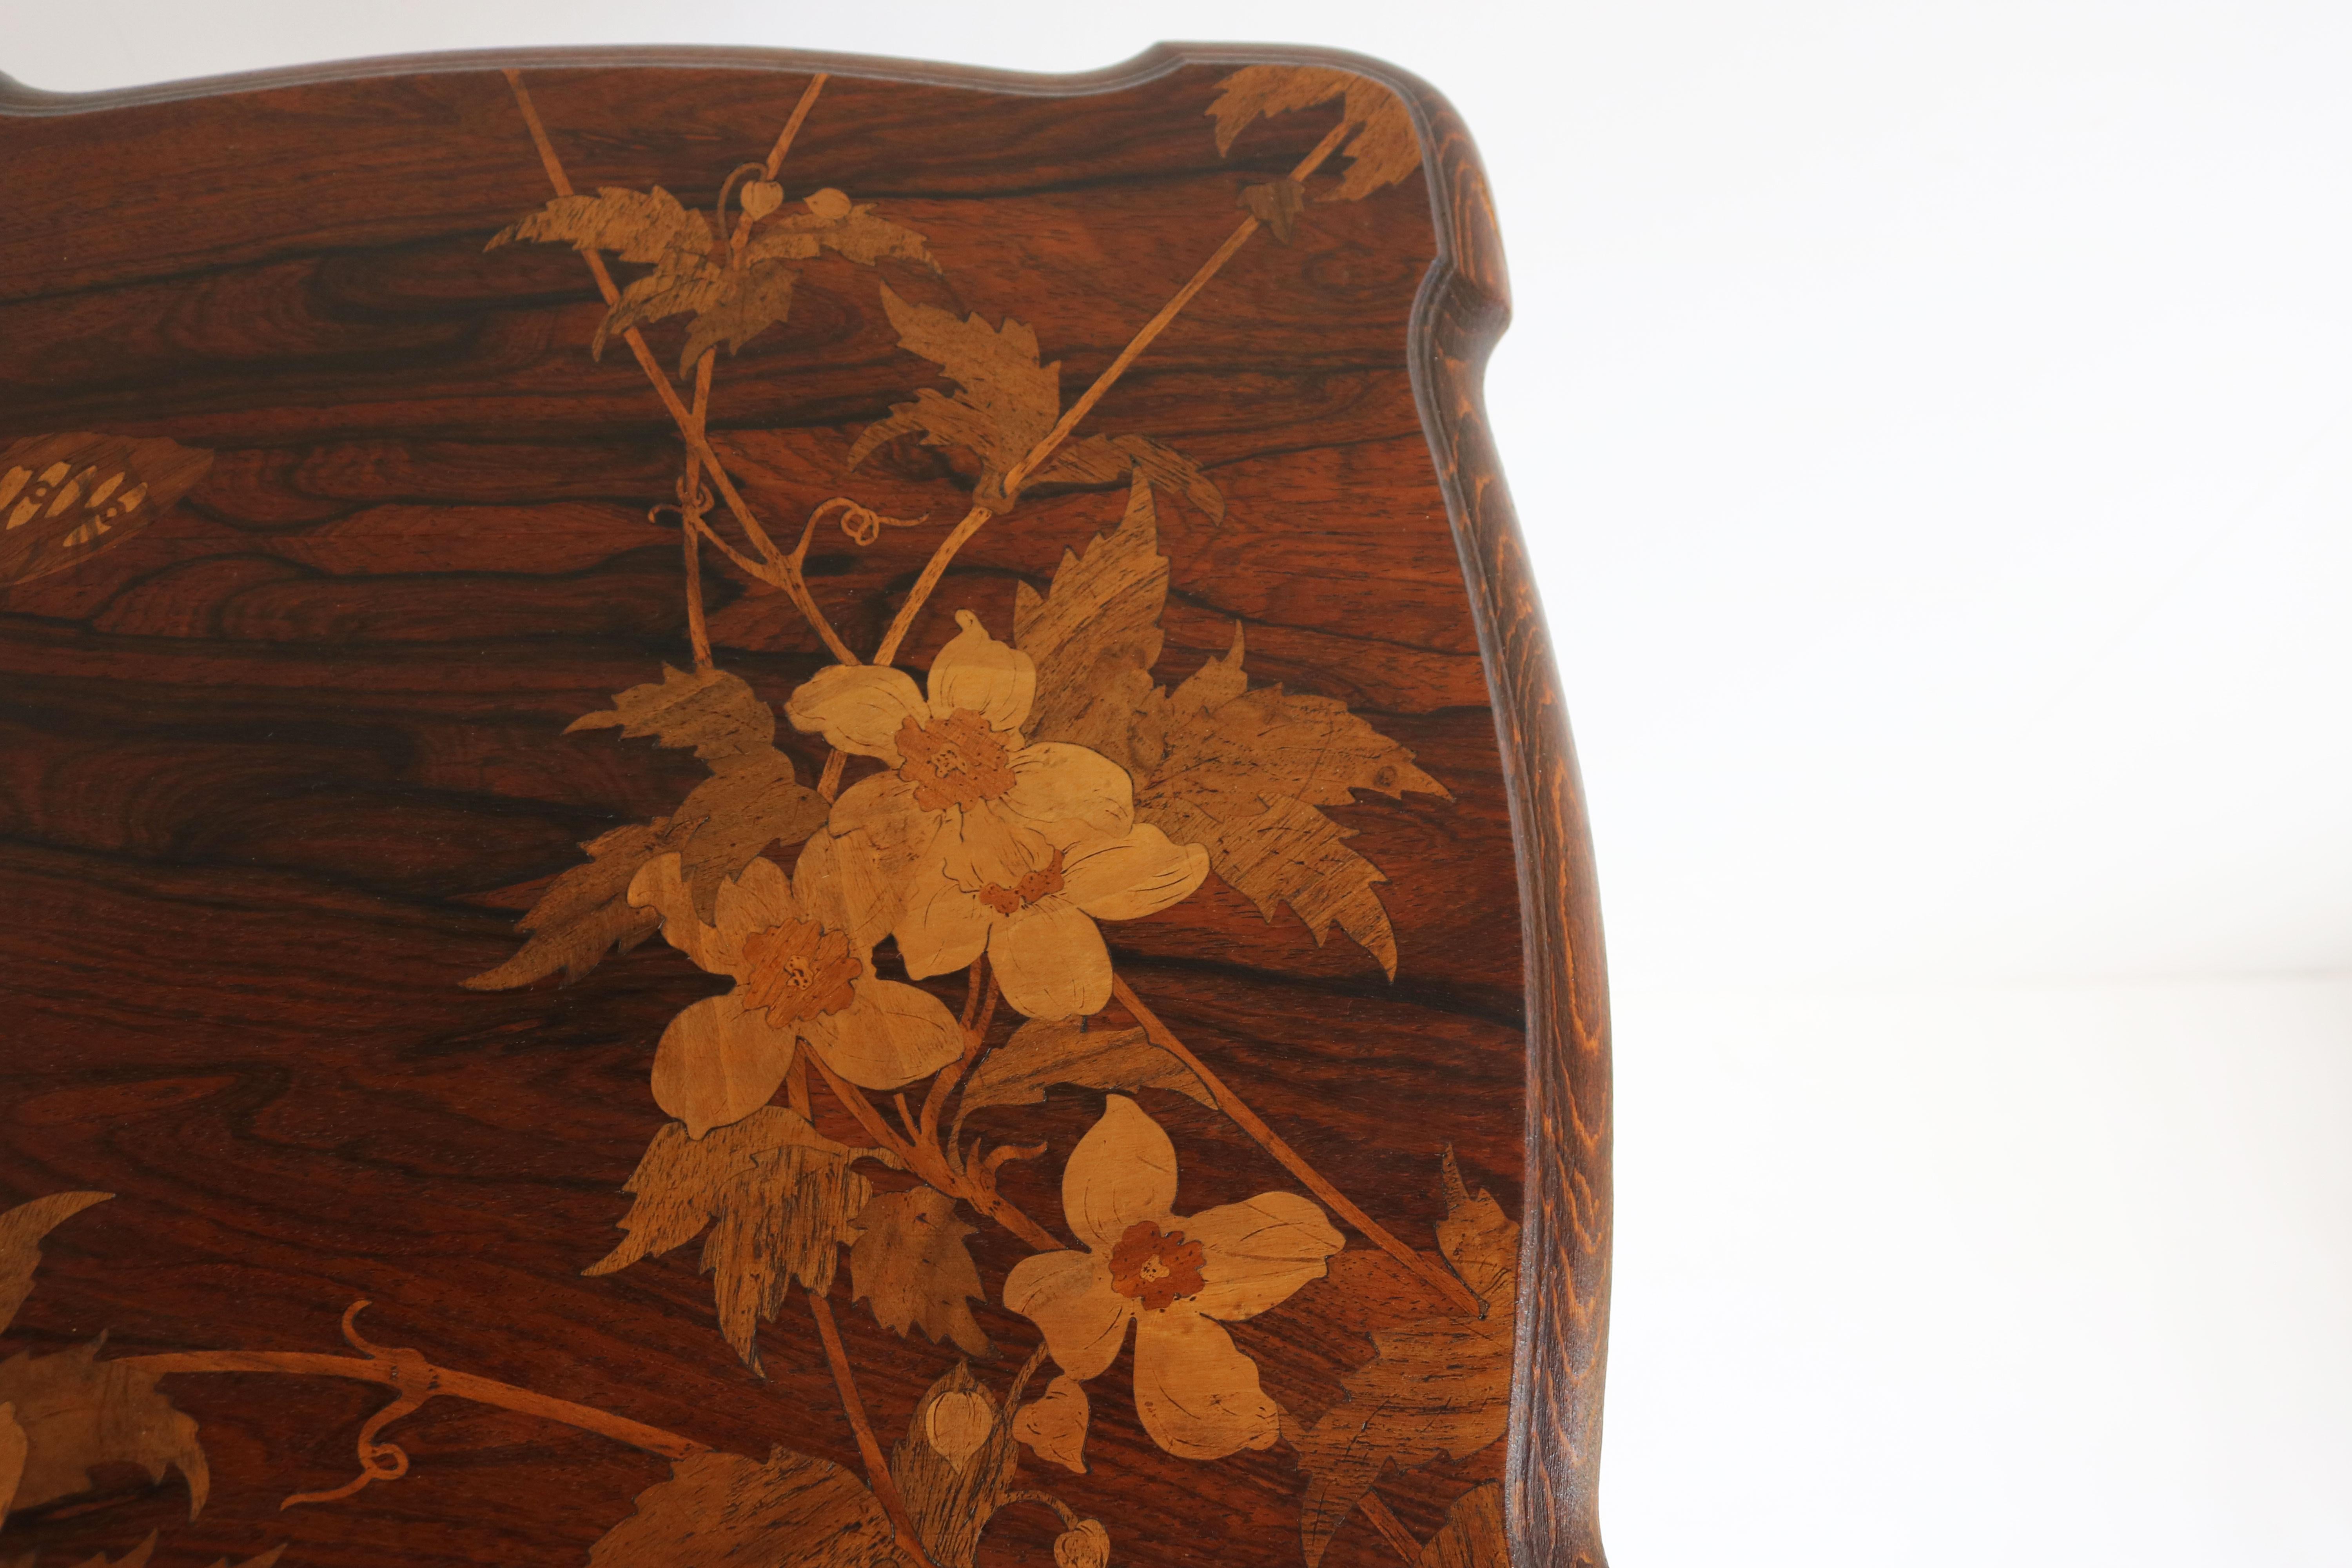 Wood Original Art Nouveau Pedestal by Emile Galle 1890 French Antique Inlaid Table For Sale